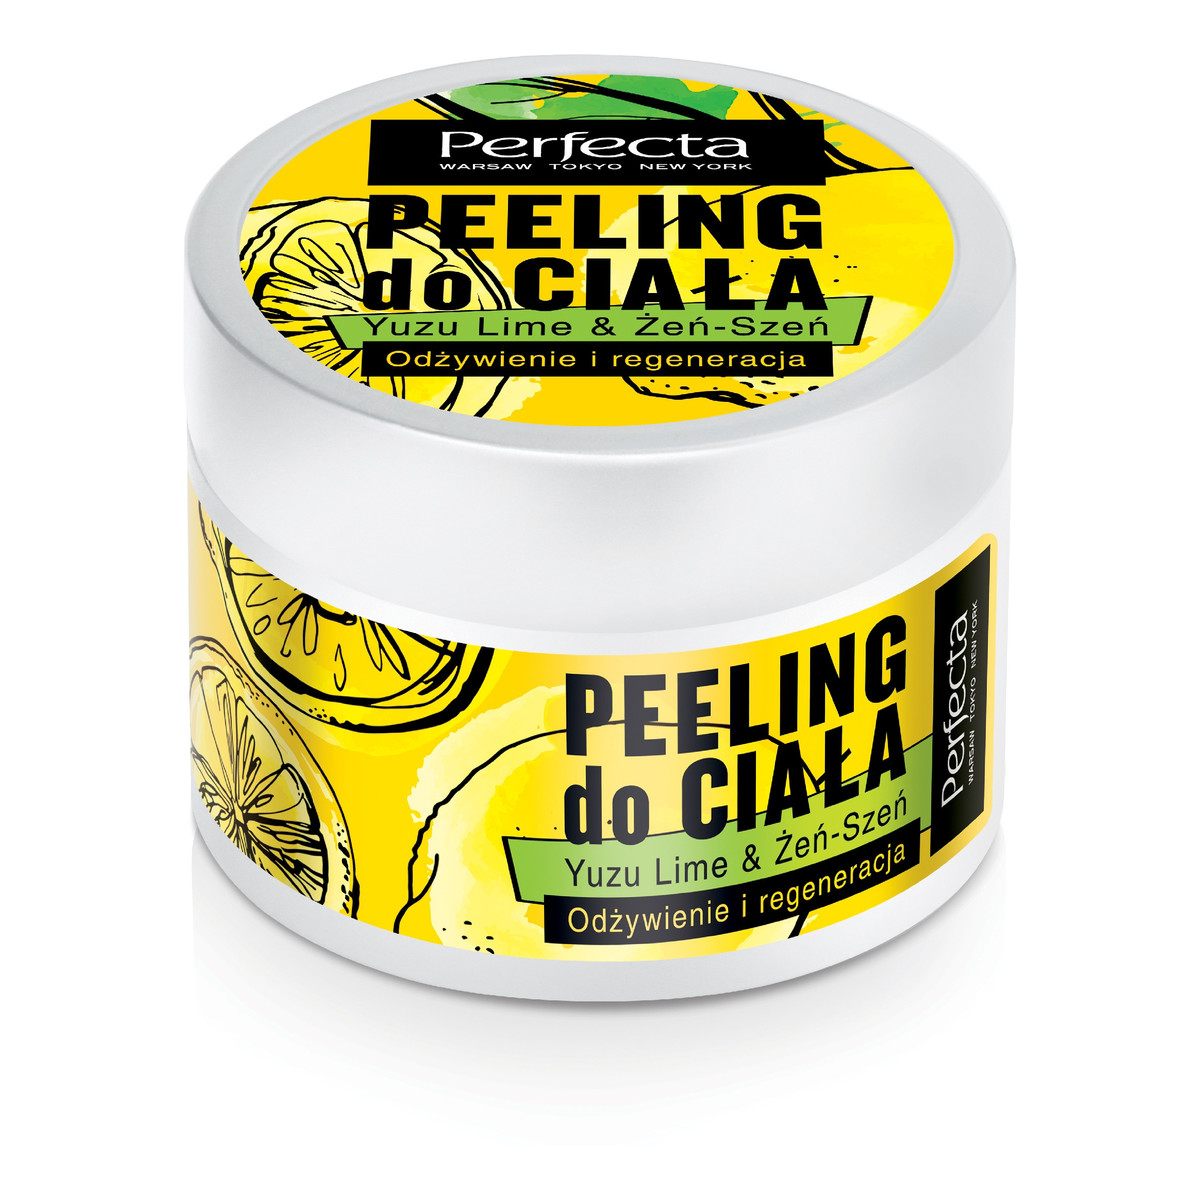 Perfecta Peeling do ciała Żeń-szeń&Yuzu lime 225ml